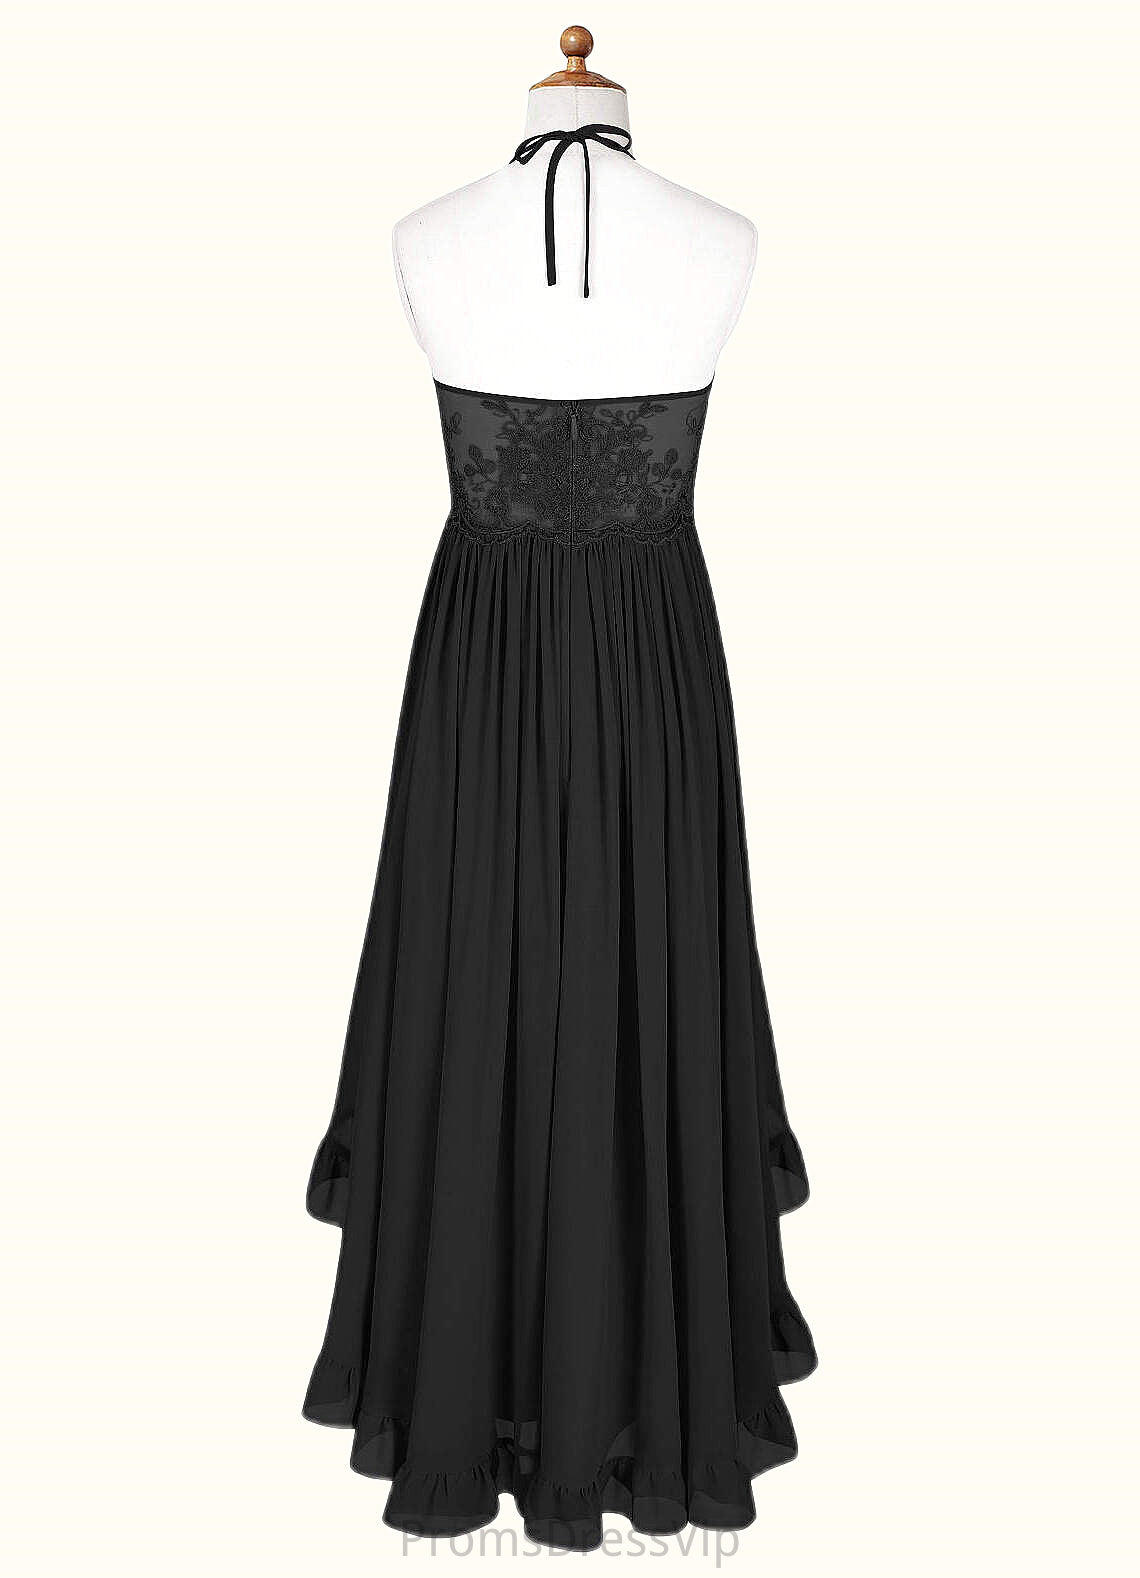 Cynthia A-Line Lace Chiffon Asymmetrical Junior Bridesmaid Dress black HLP0022855